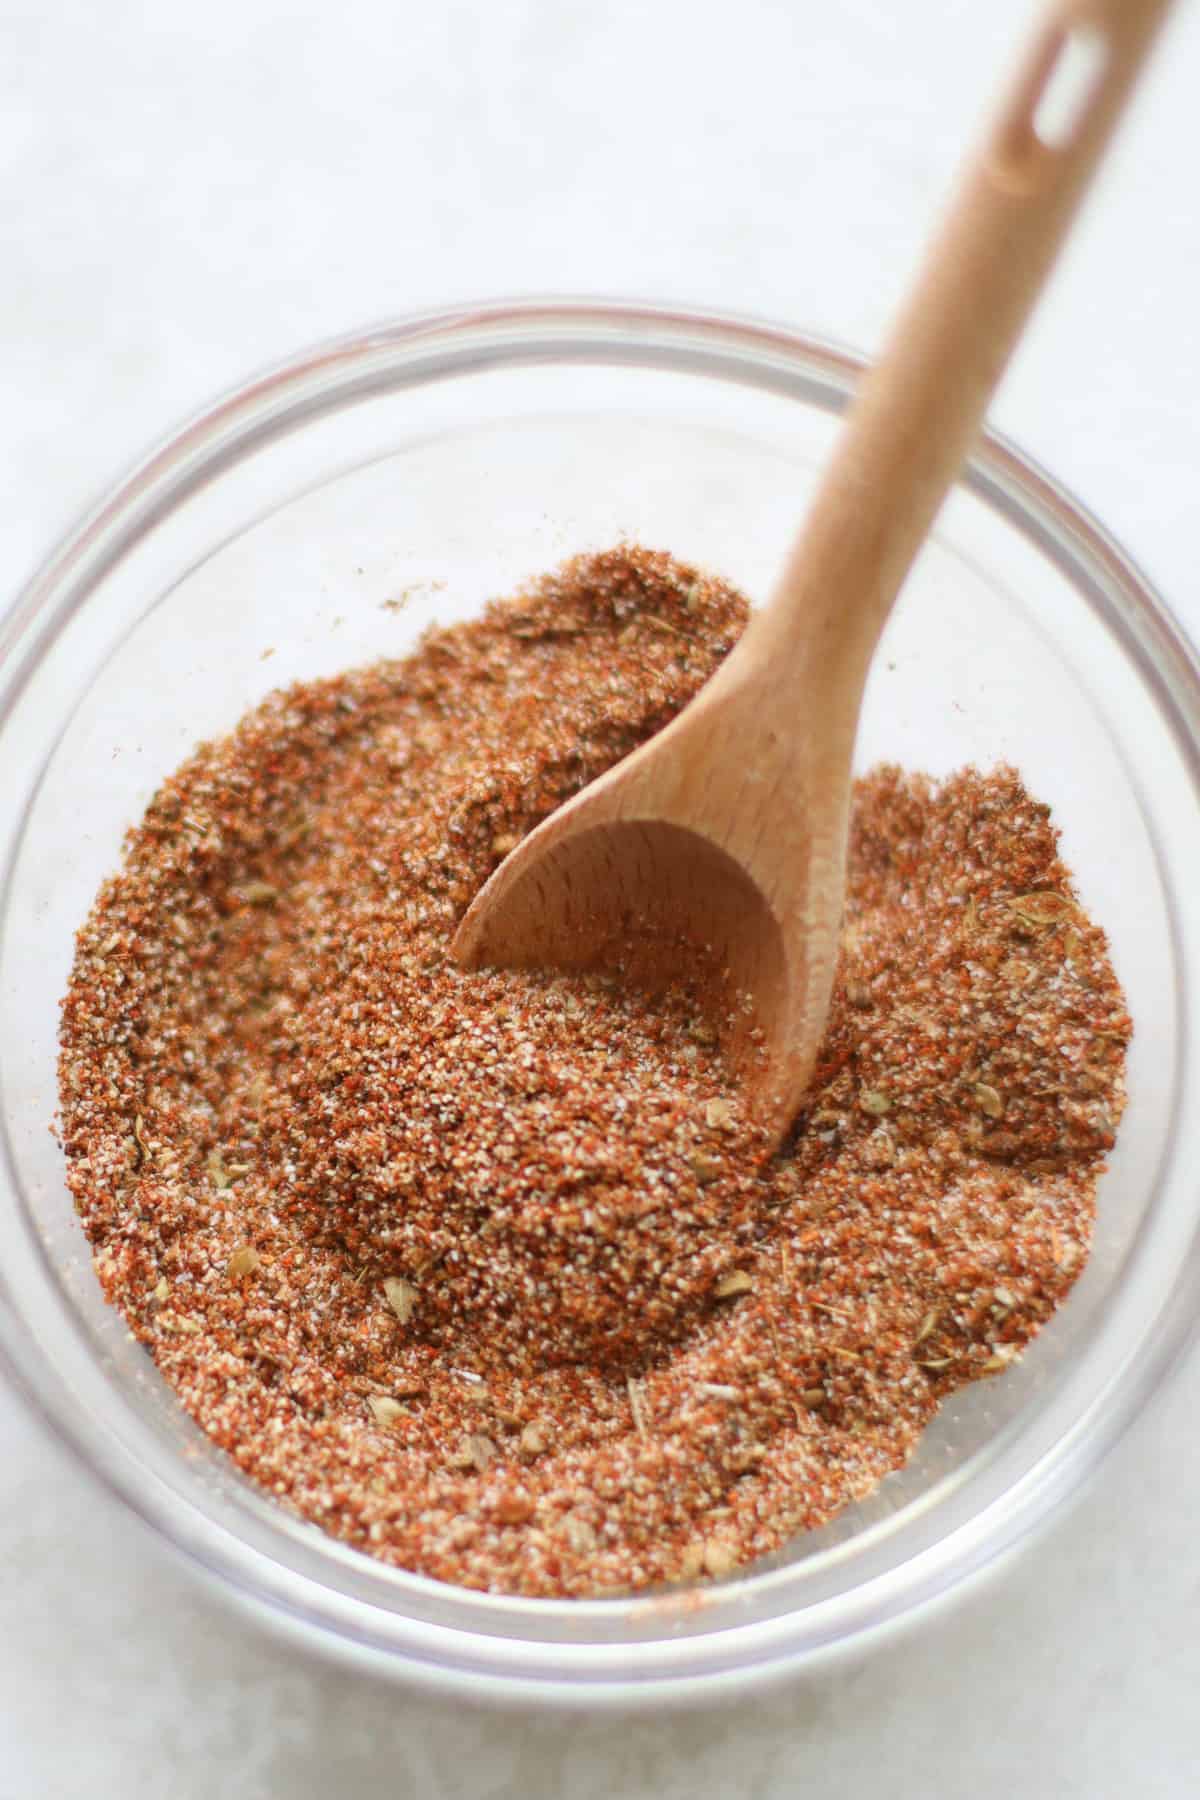 https://www.mjandhungryman.com/wp-content/uploads/2023/02/No-salt-taco-seasoning-blend.jpg